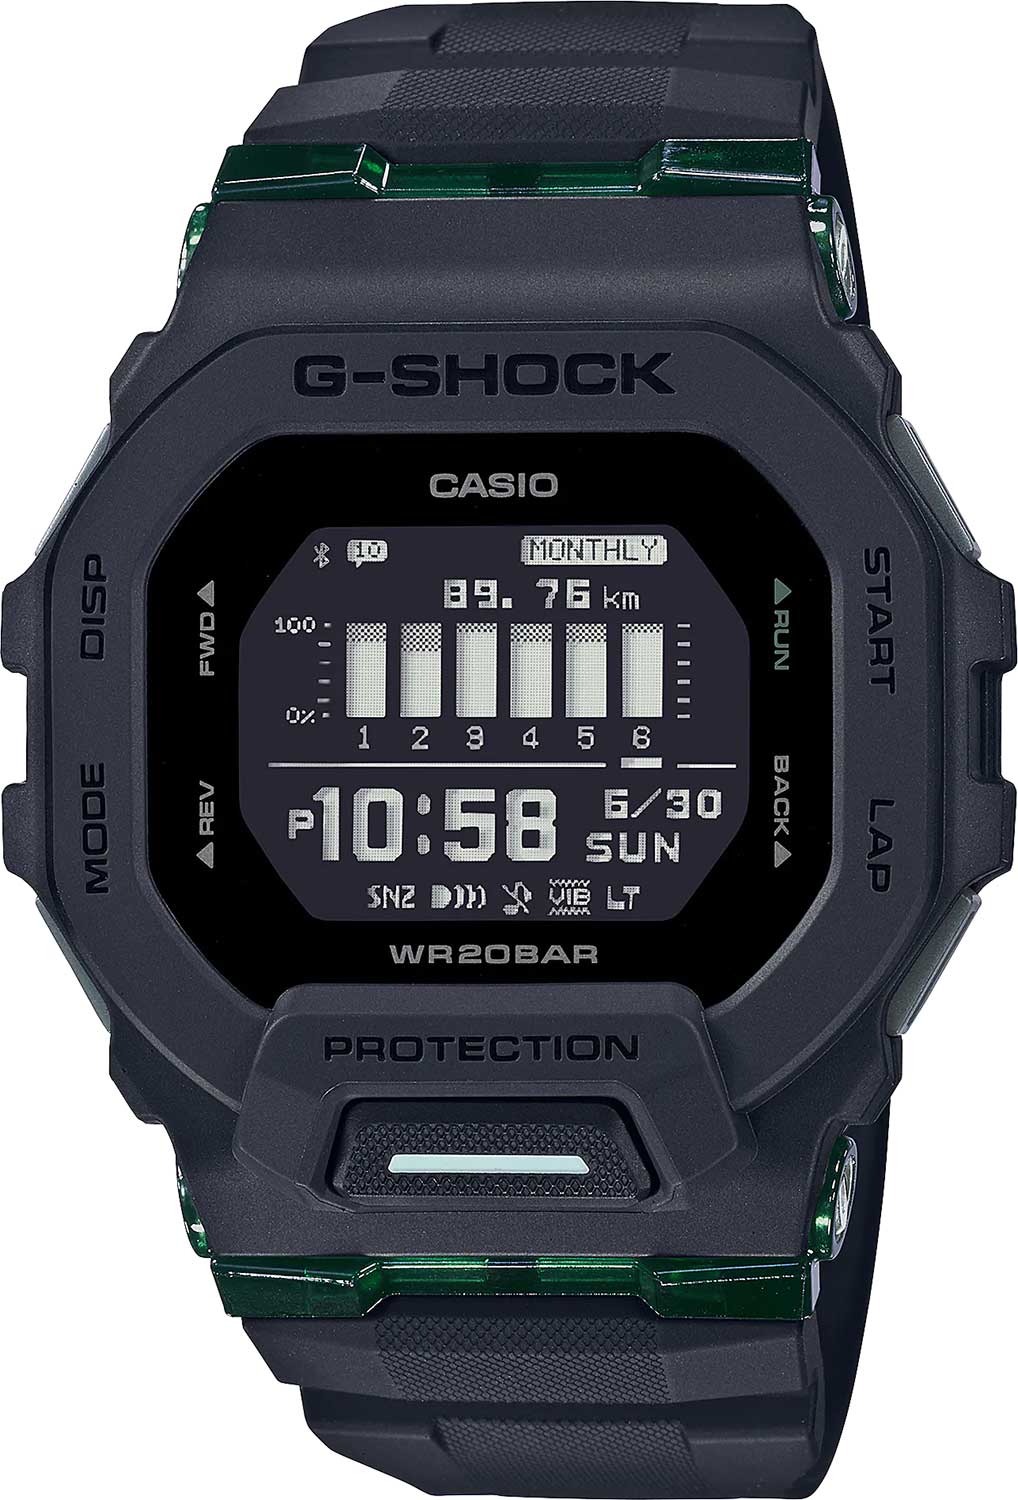     Casio G-SHOCK GBD-200UU-1ER  